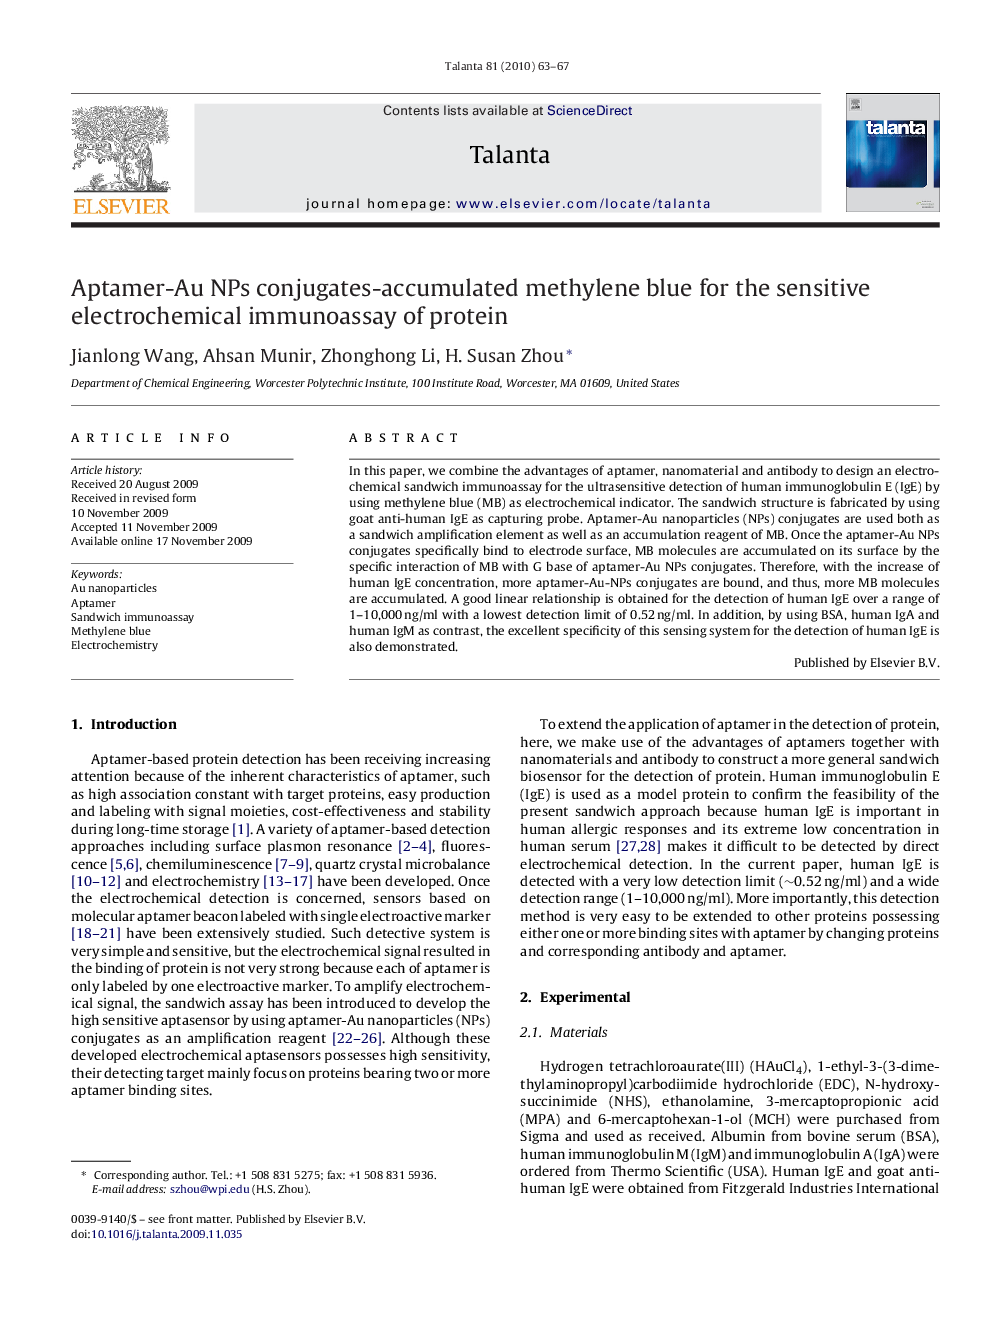 Aptamer-Au NPs conjugates-accumulated methylene blue for the sensitive electrochemical immunoassay of protein